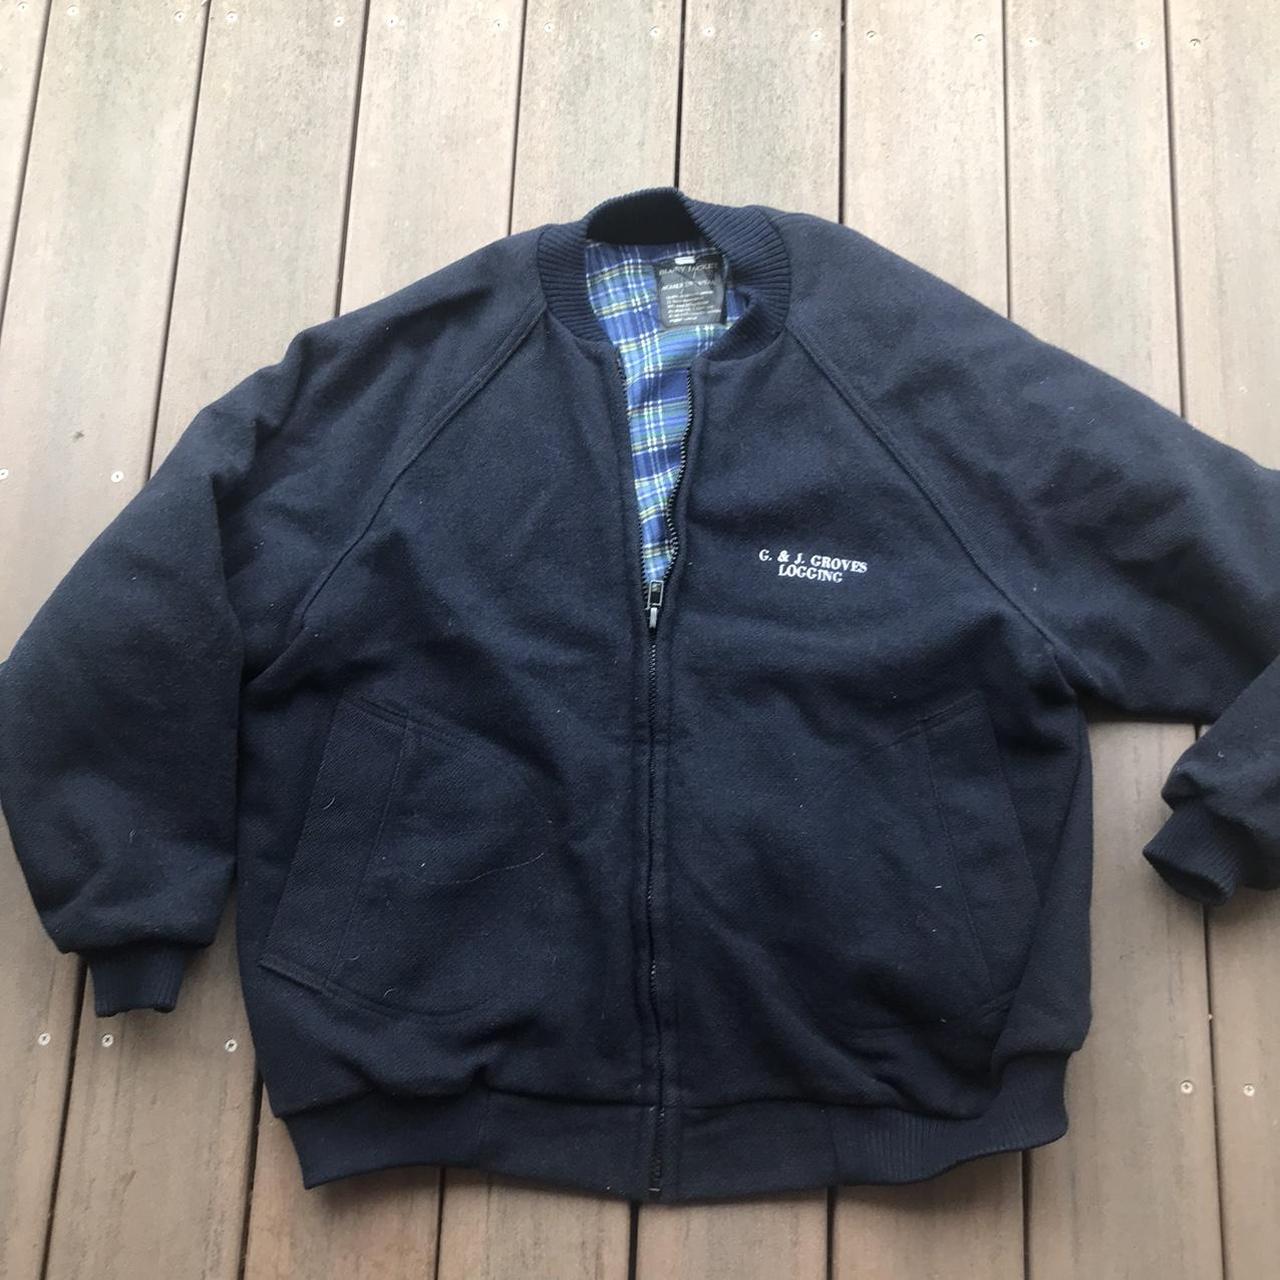 Original Bluey work jacket Straight from the... - Depop